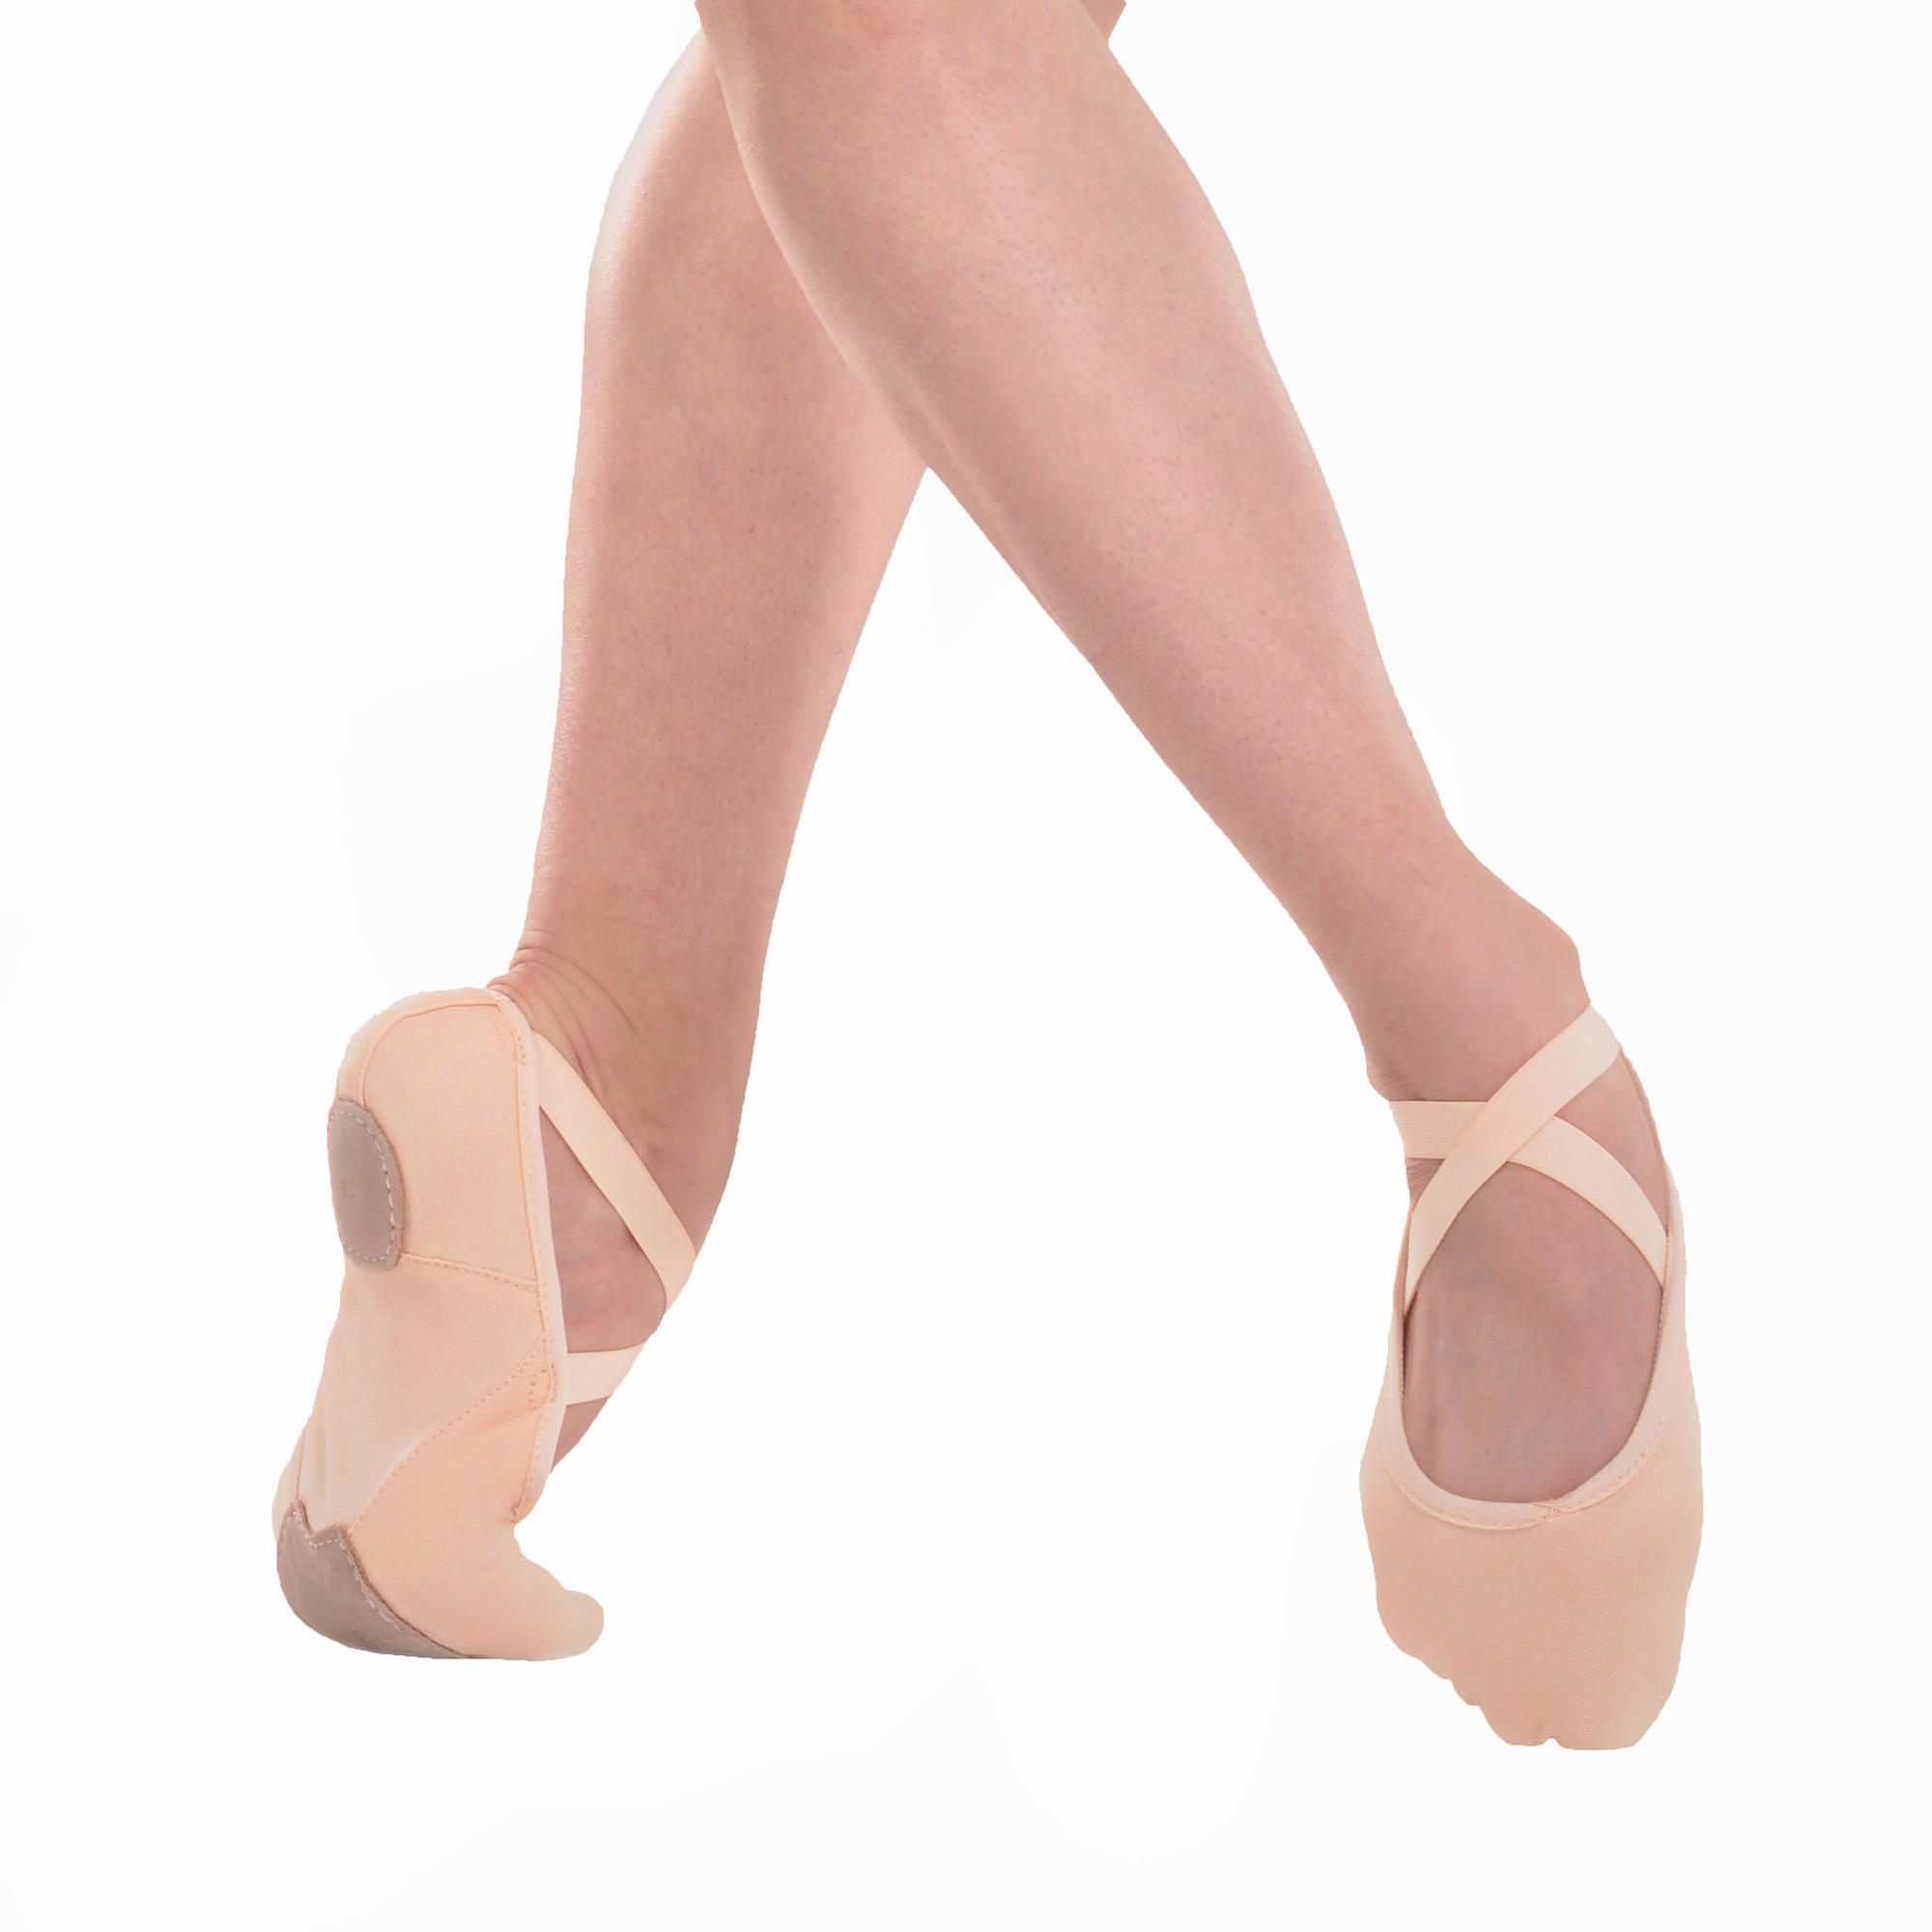 Stretch Canvas SplitSole DemiPointe Ballet Shoes Size 7